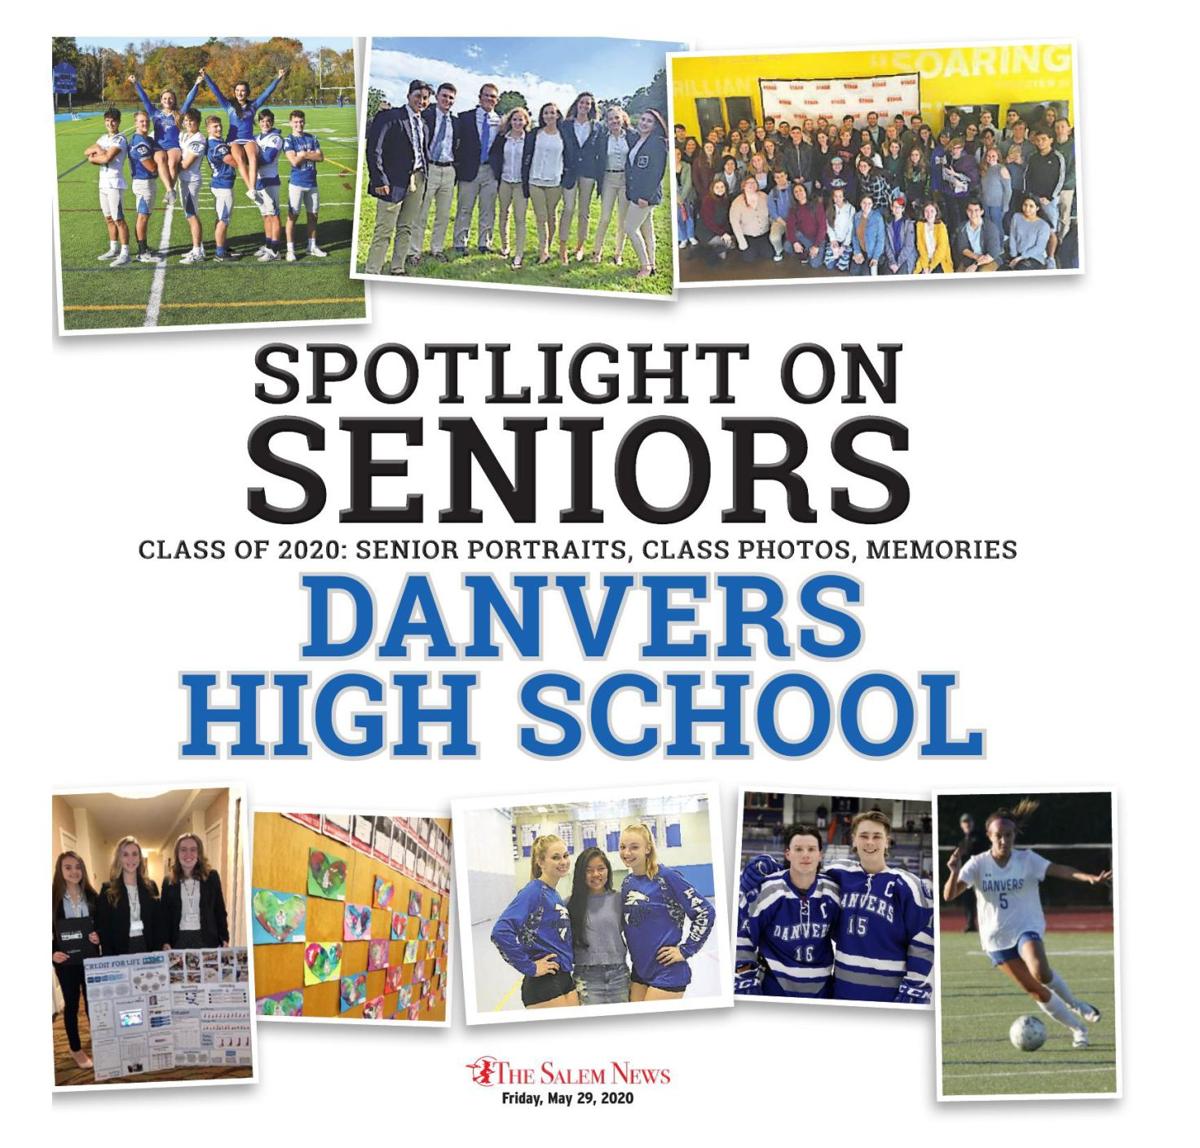 Spotlight on Seniors Danvers High School Special Sections